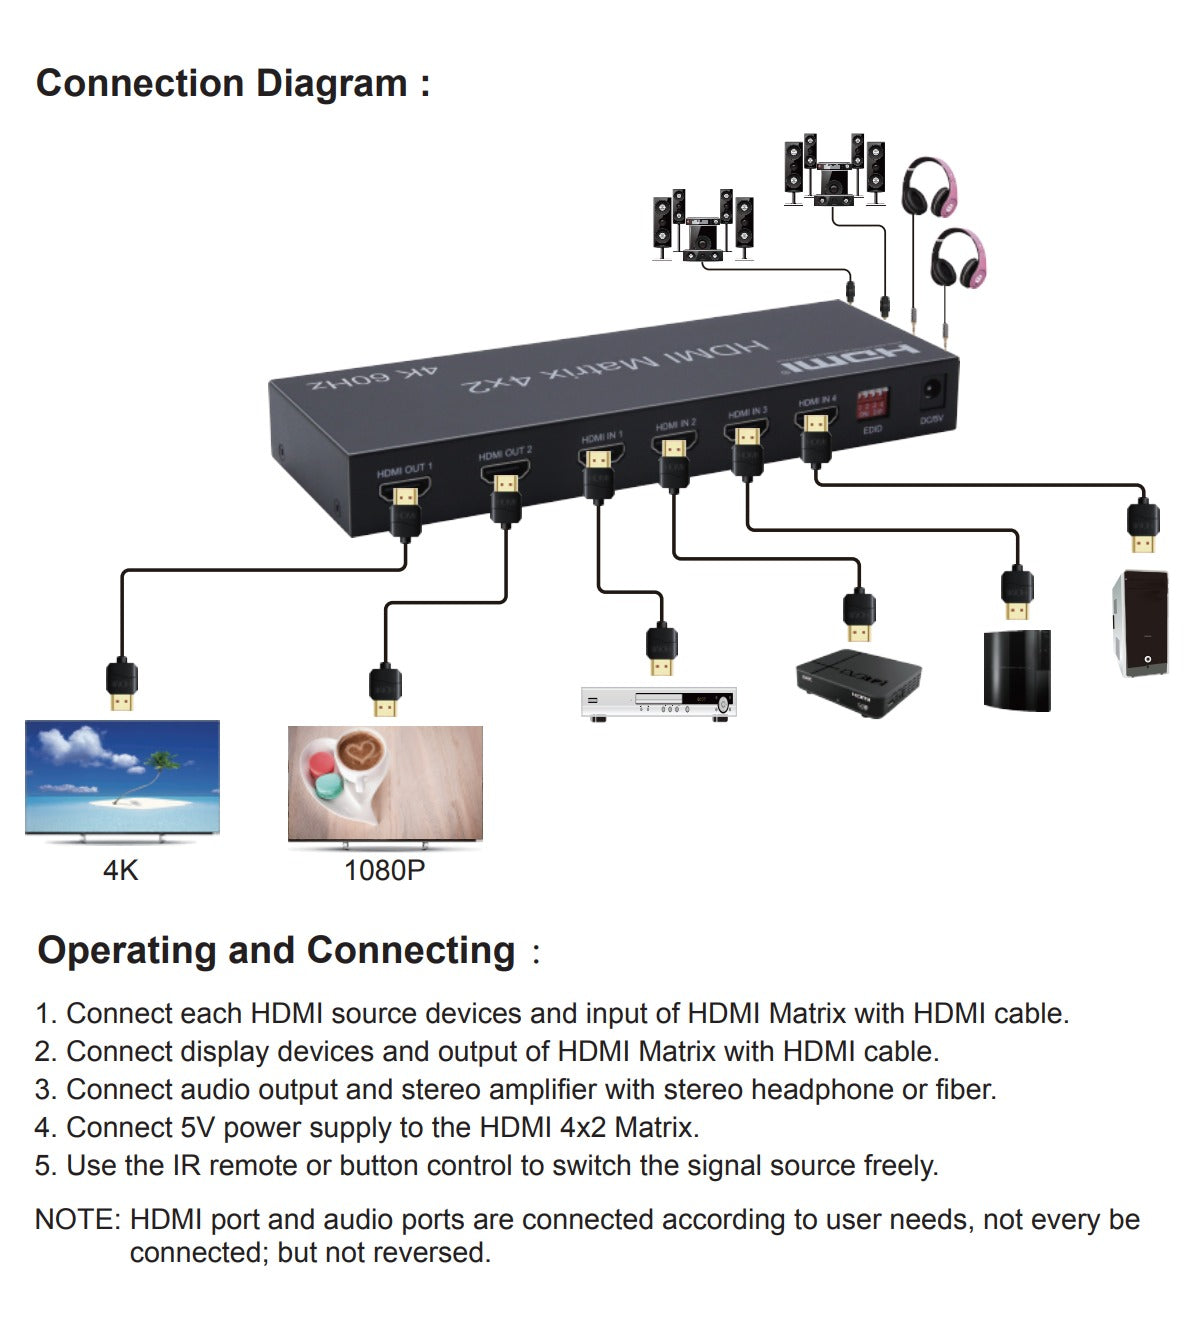 ArgoX 4K 30Hz / 4K 60Hz 4x2 HDMI Matrix Video Switch Splitter with 4K 30Hz, Remote Control, EDID Switches, Supports HDMI1.4b/HDCP1.4, Audio LPCM/Dolby Digital for PC Laptop, TV, Gaming, DVD | HDMX4X2-NS HDMX4X2-V2.0